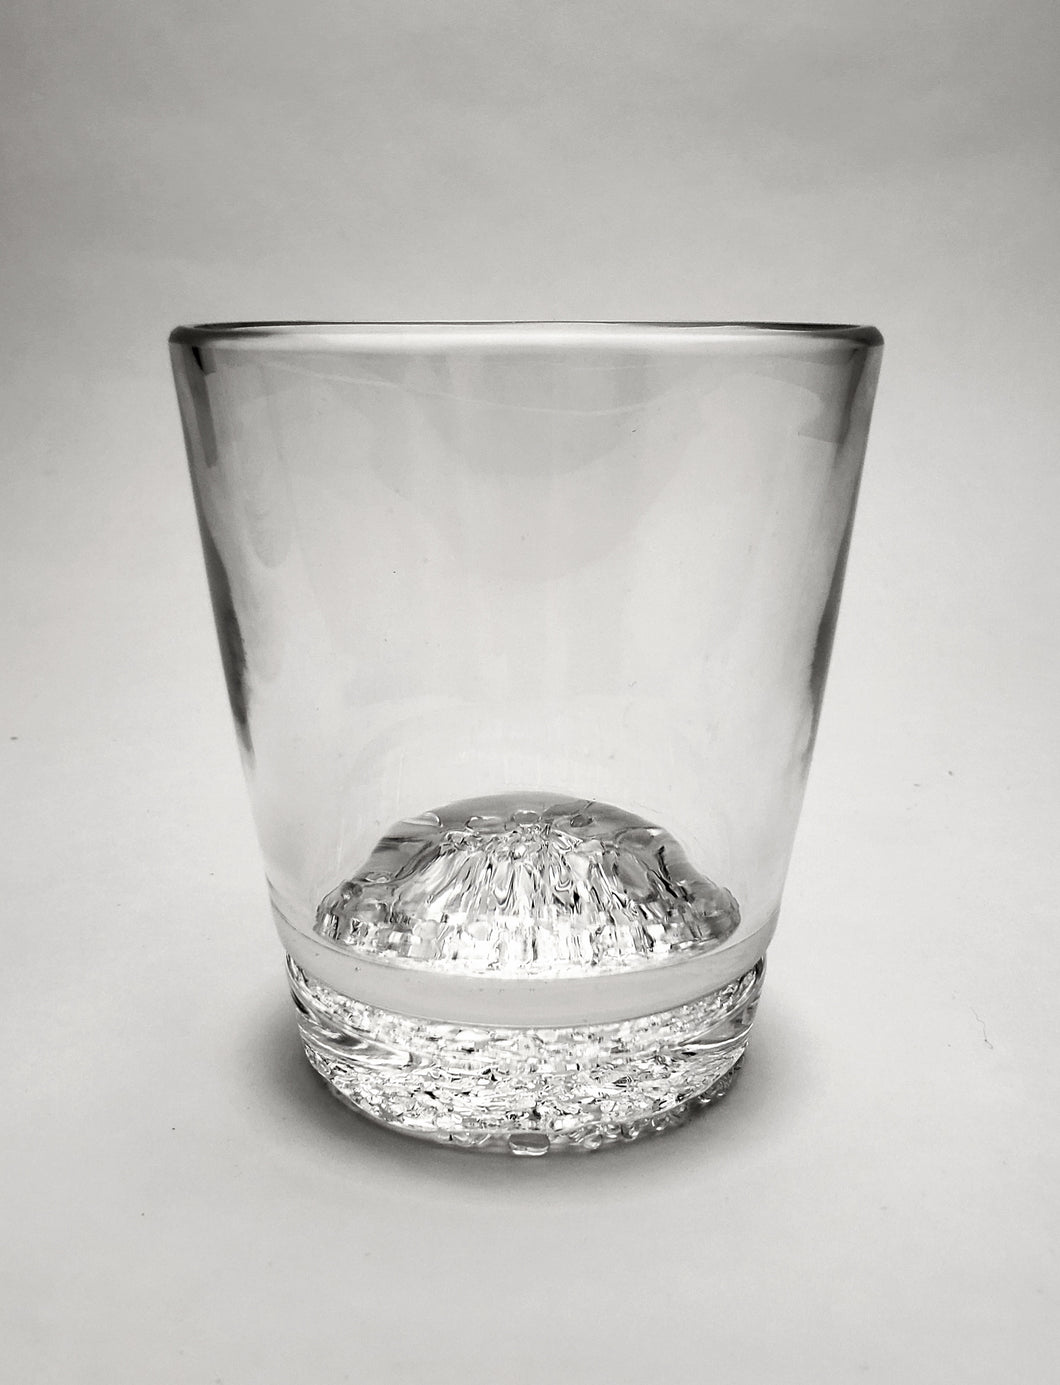 The Kerouac Tequila Glass